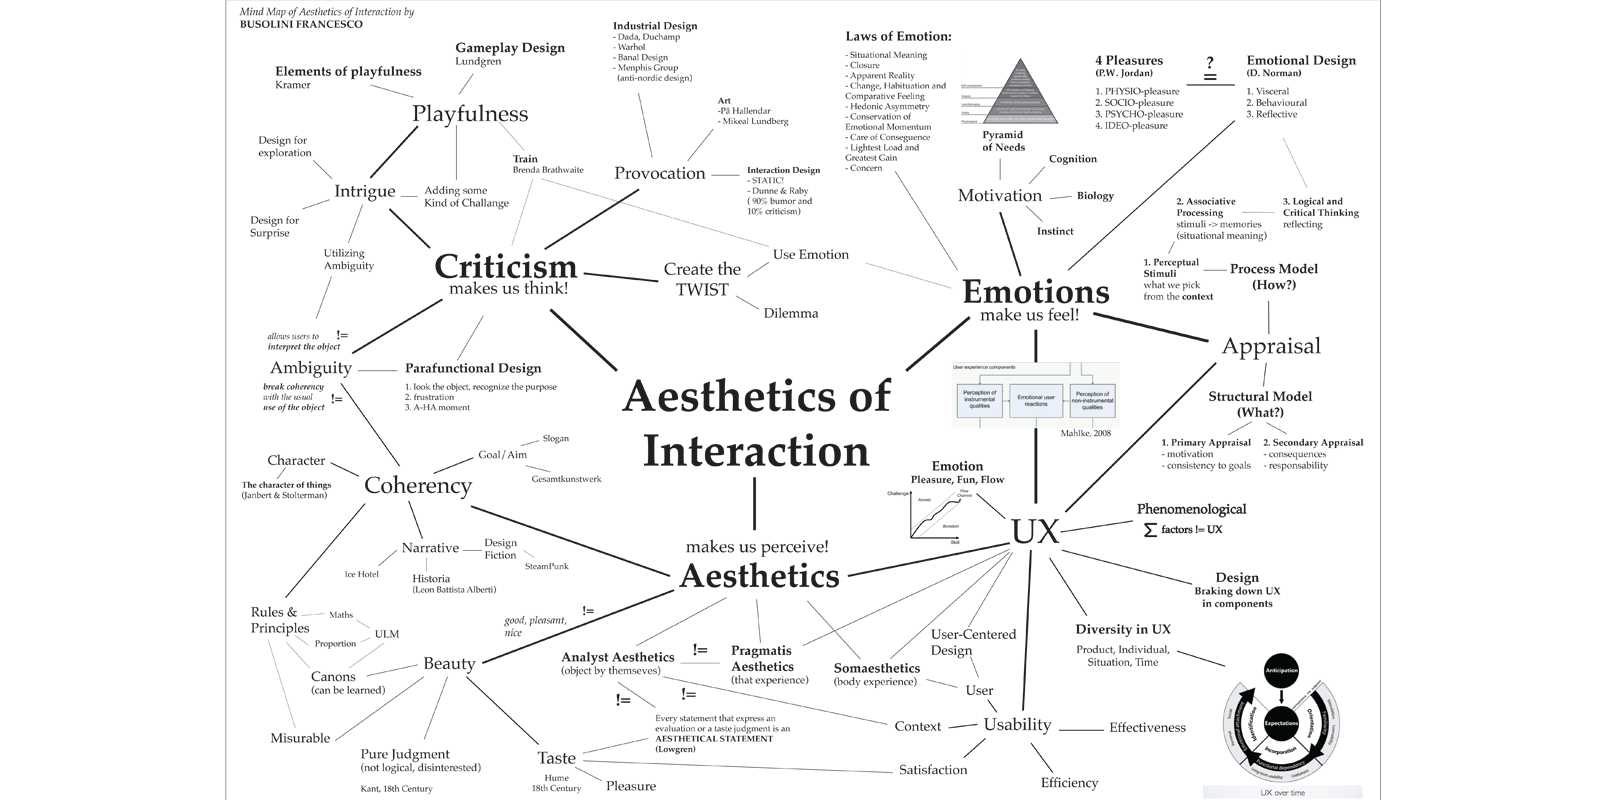 Aesthetics of Interaction concept.